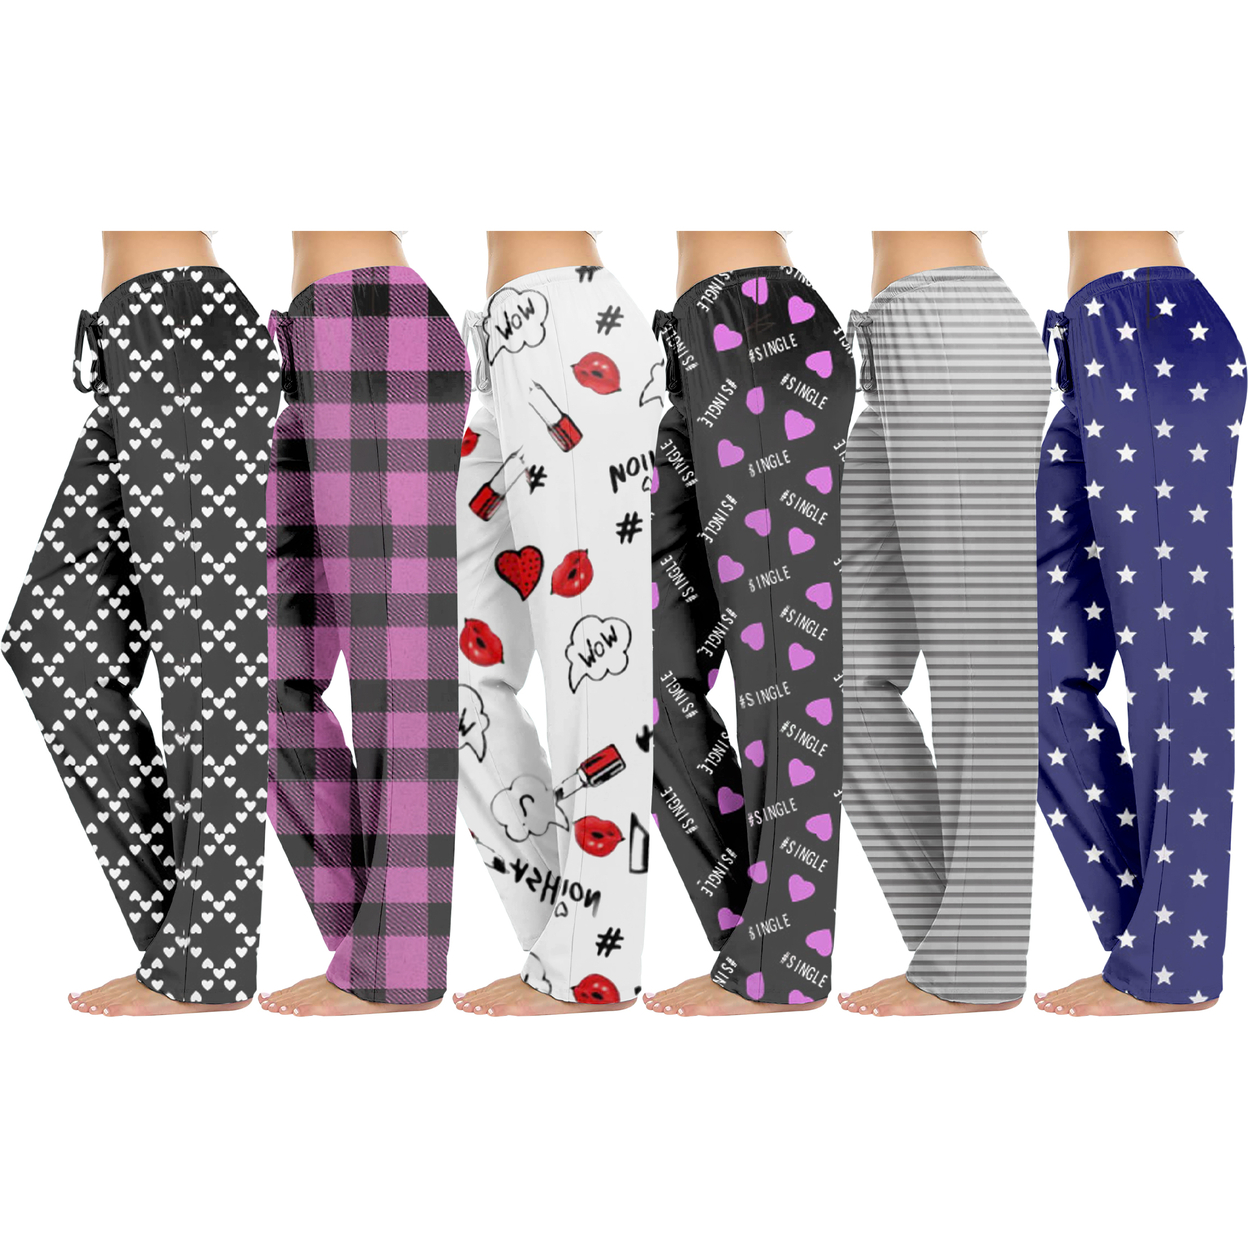 2-Pack: Women's Casual Fun Printed Lightweight Lounge Terry Knit Pajama Bottom Pants - X-large, Love